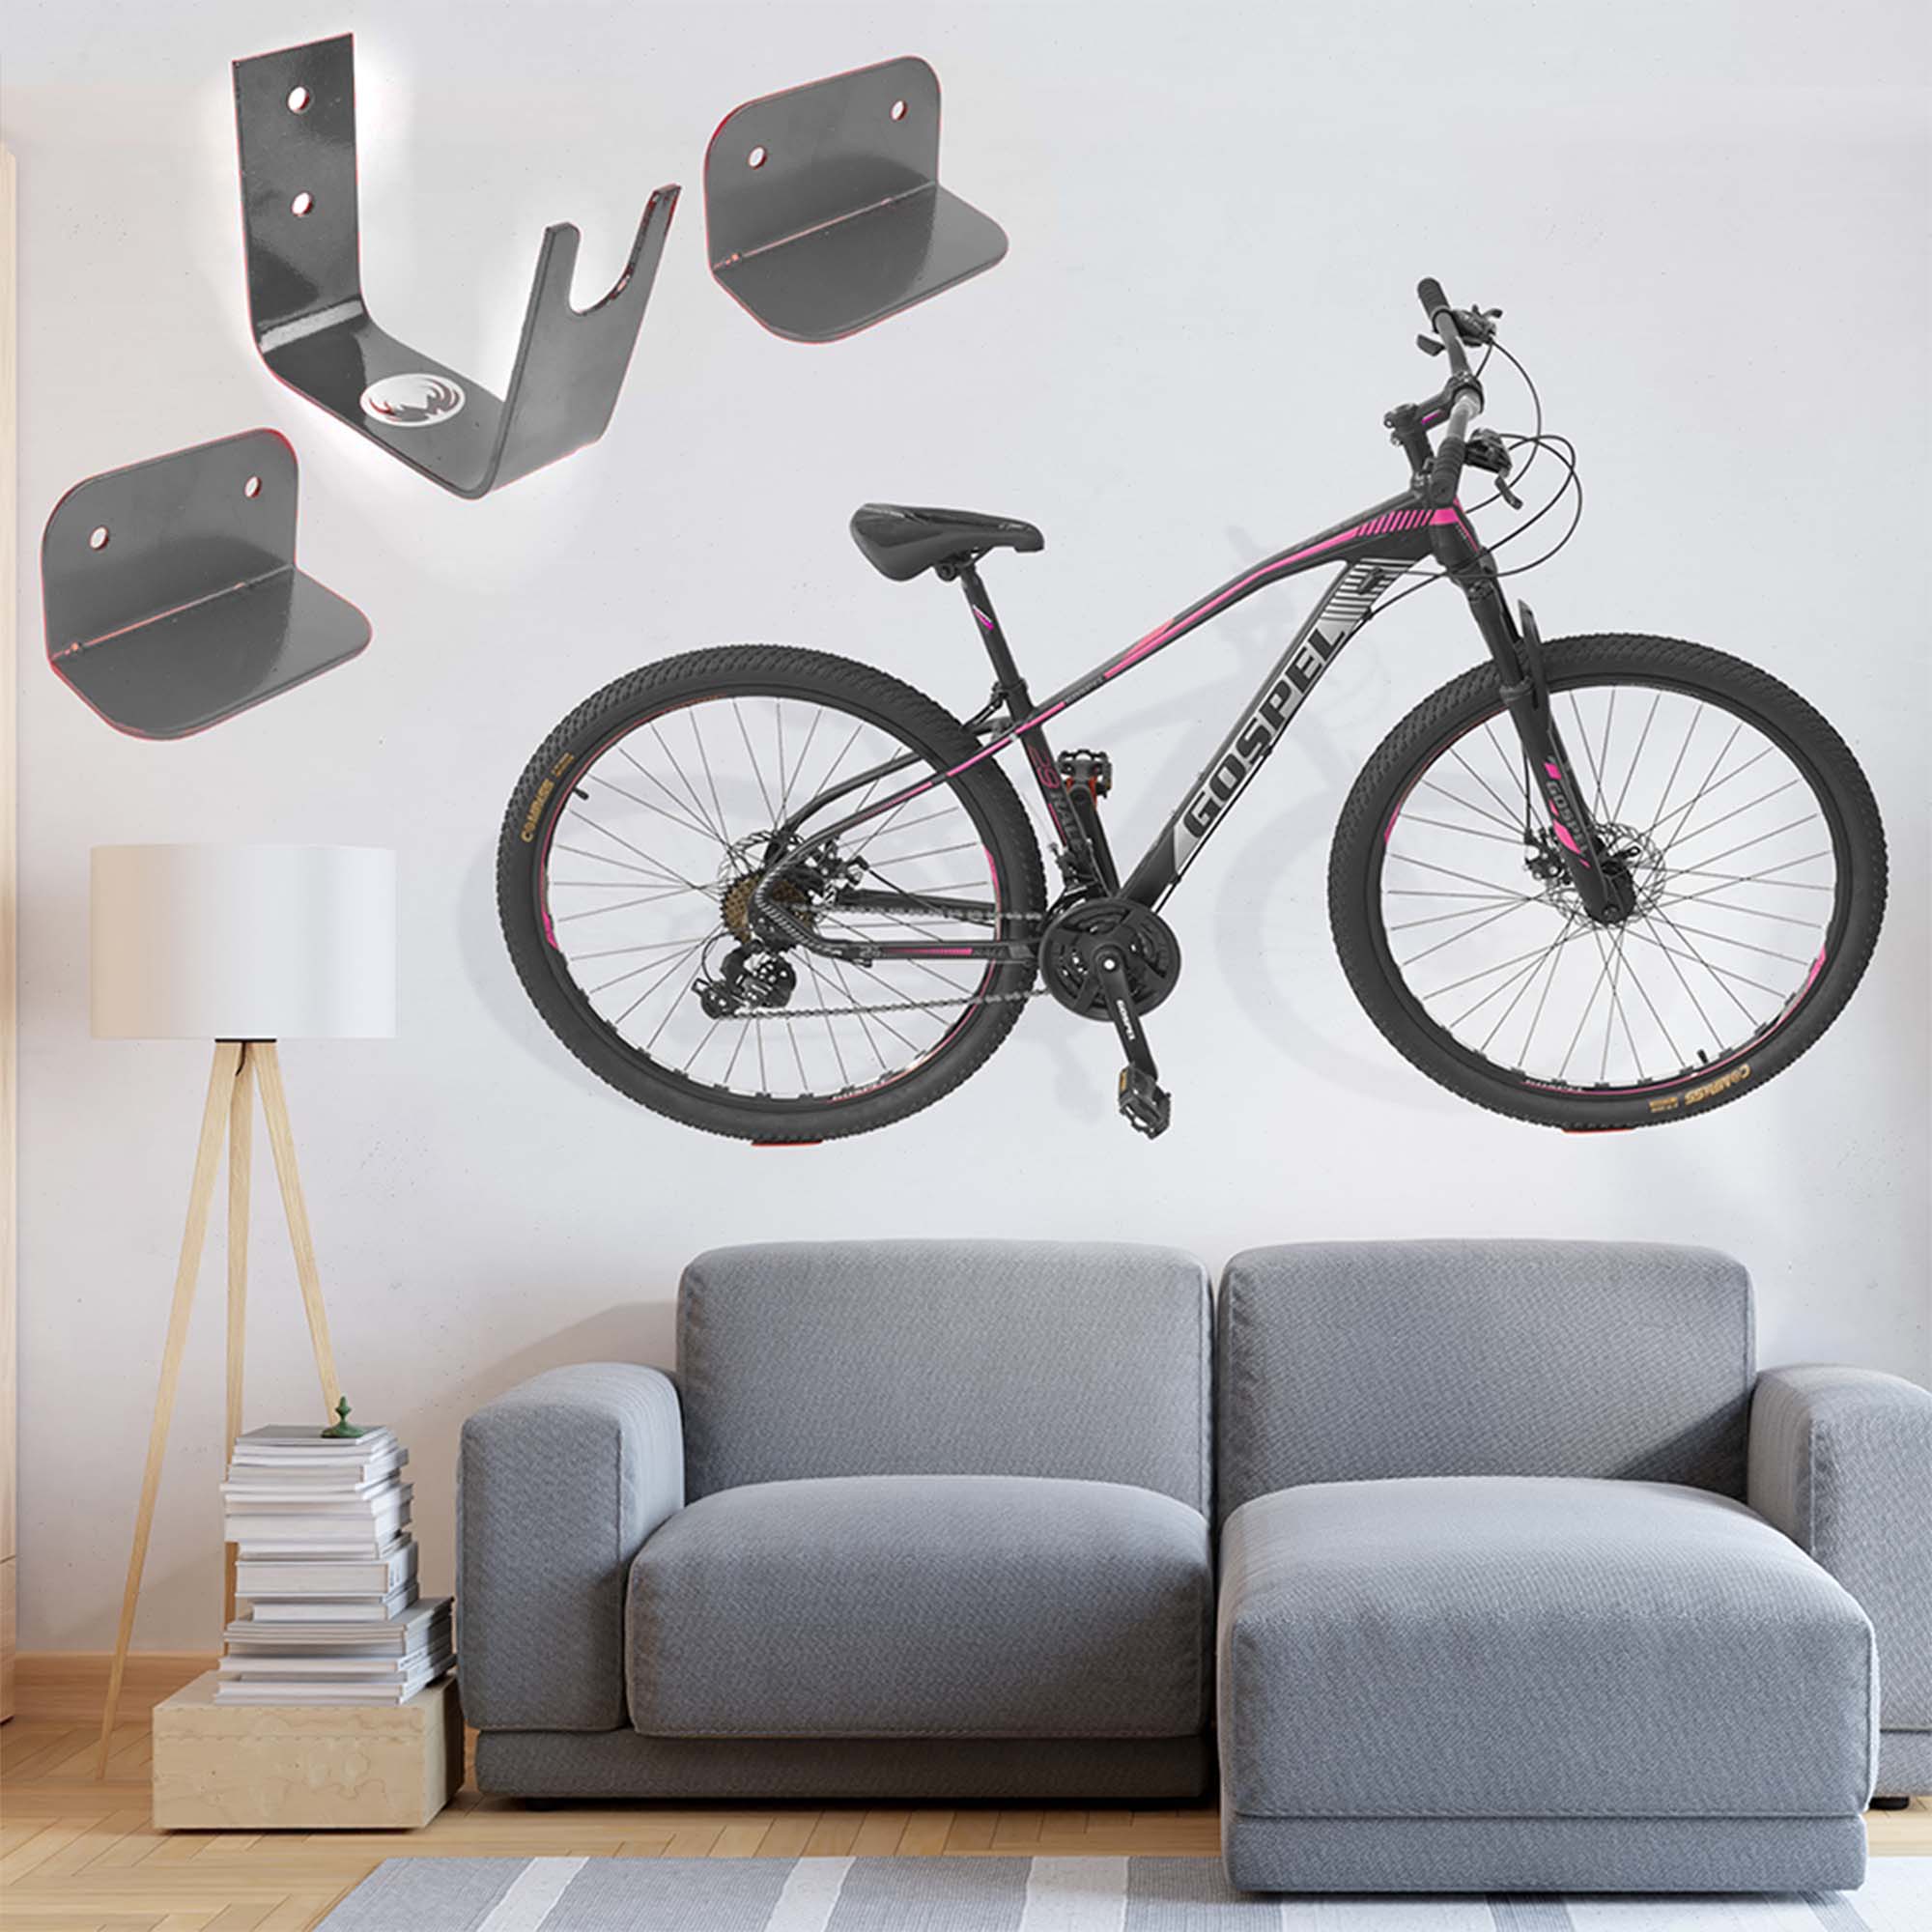 Ciclometa Detalles Soporte de pedal para colgar bicicleta en la pared Mach  plata